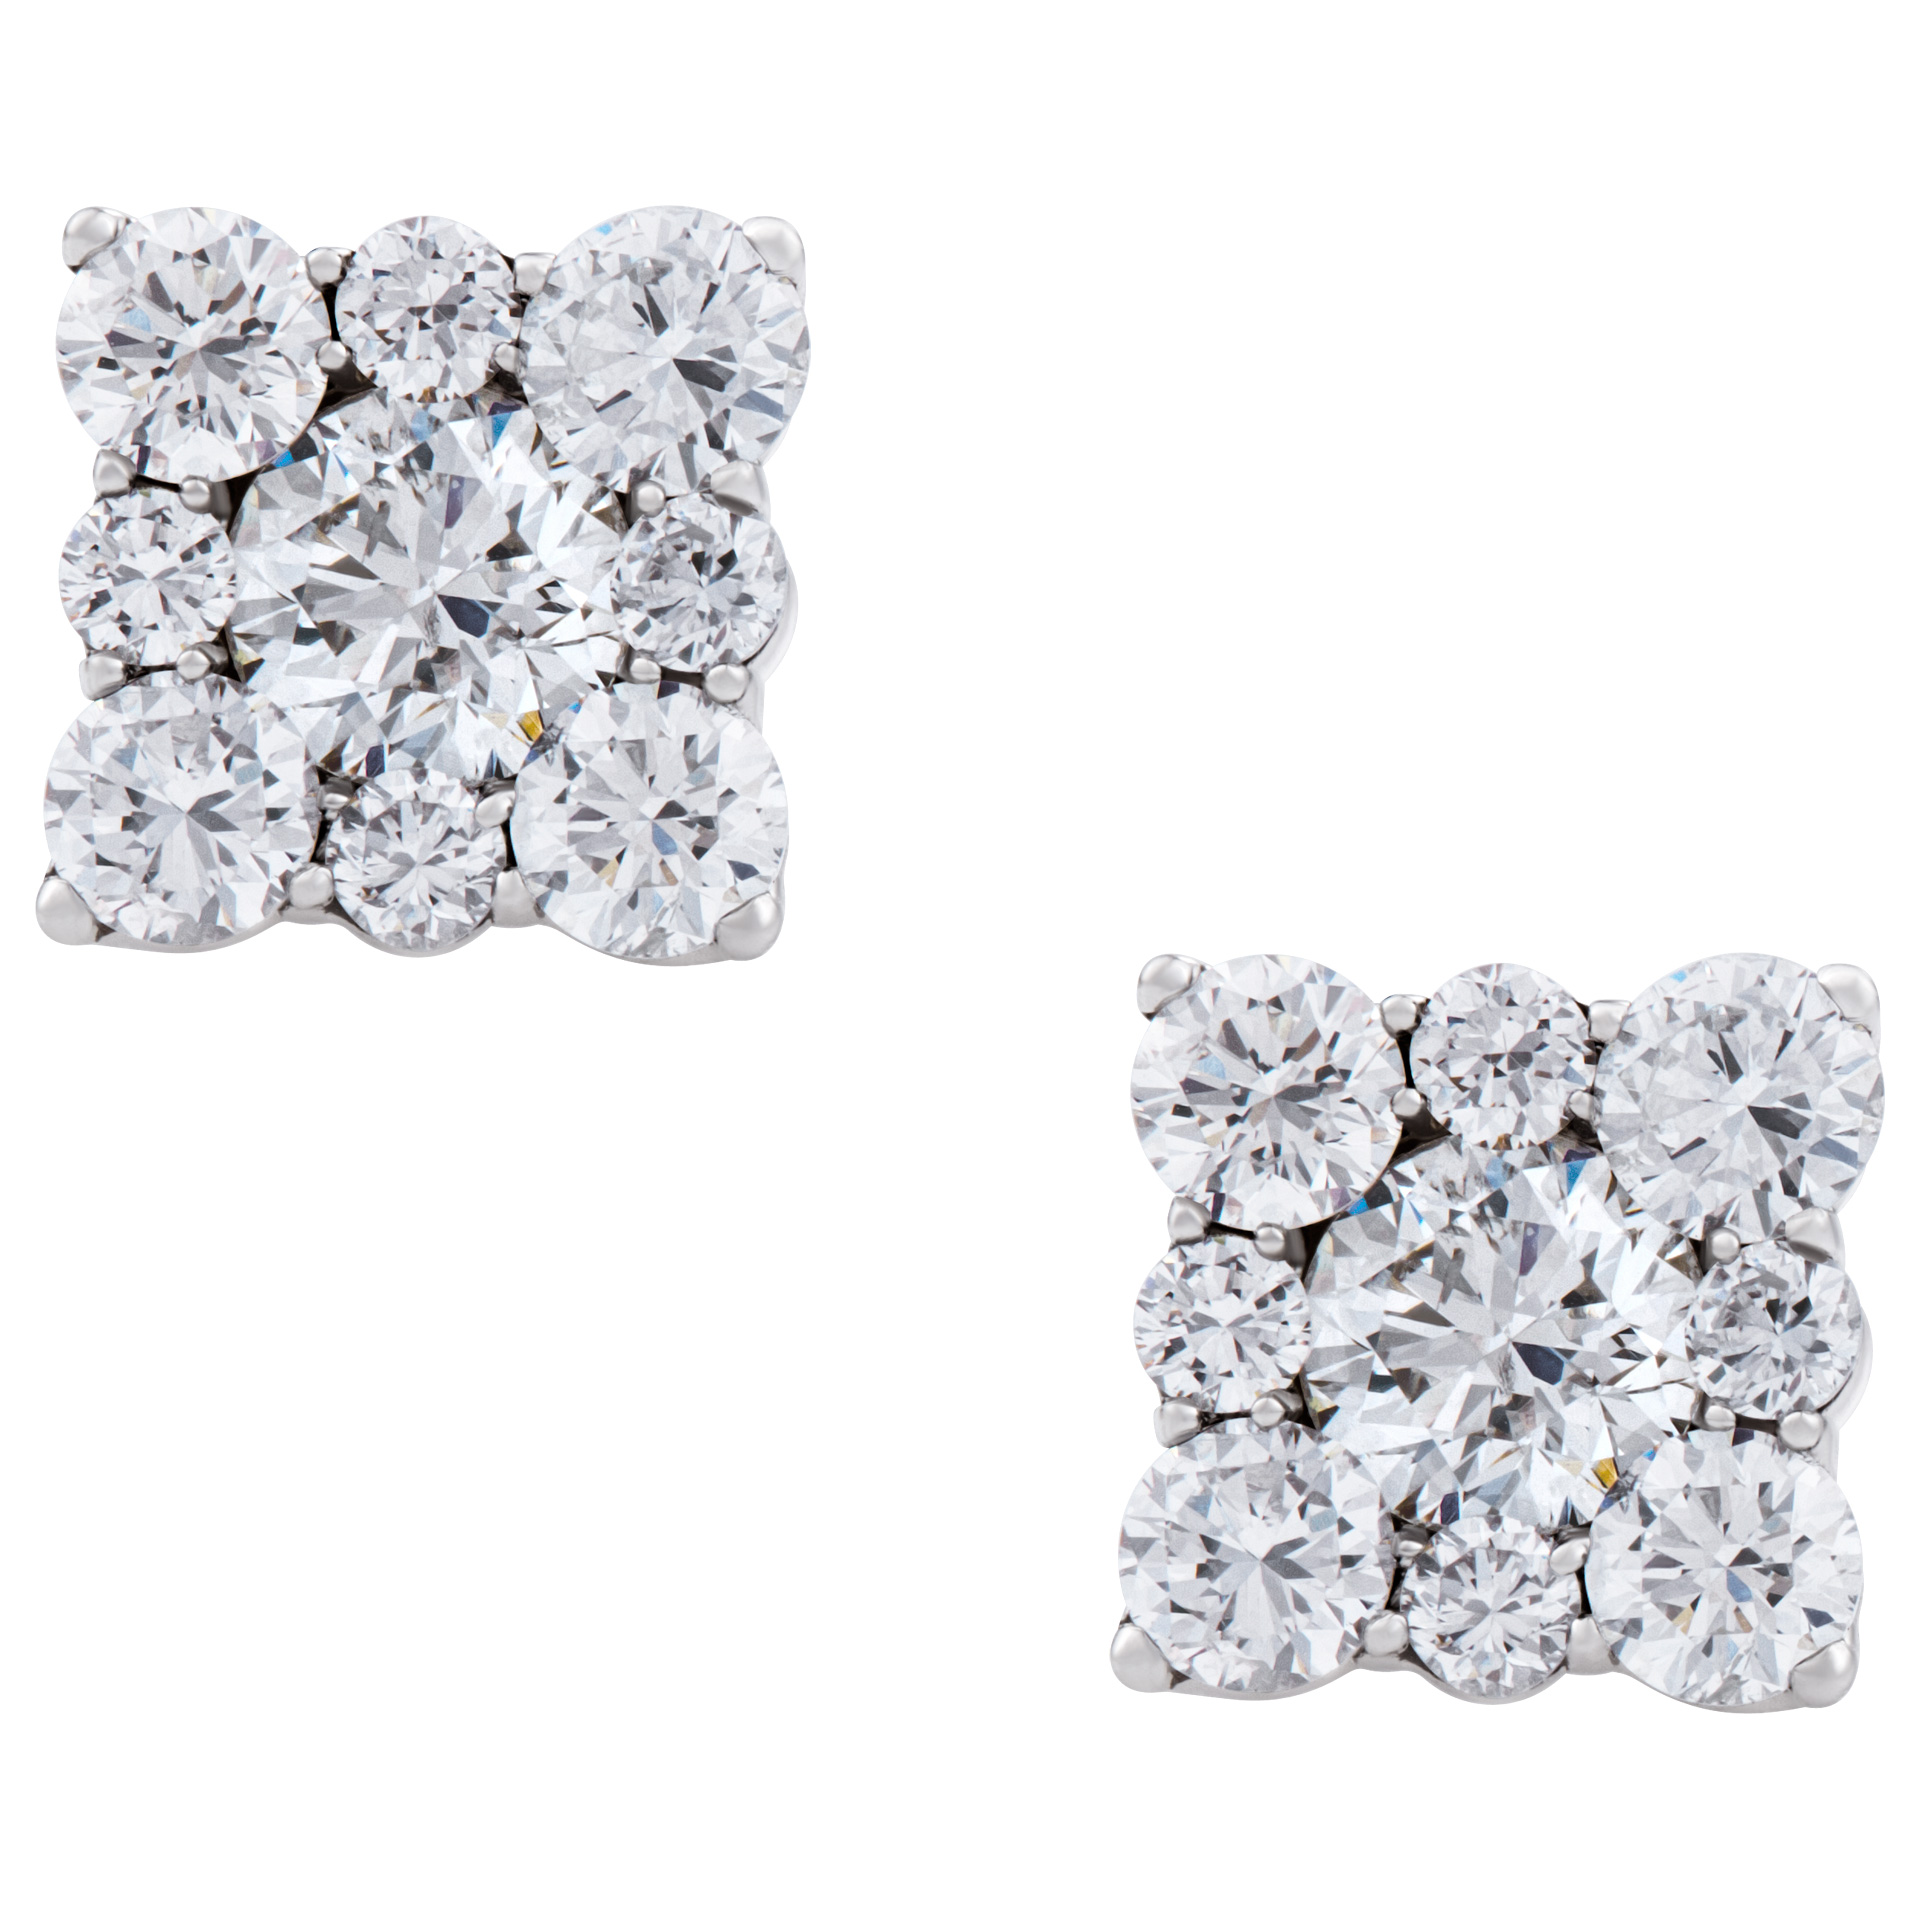 Diamond studs in 18k white gold. 2.05 carats in clean white diamonds image 1